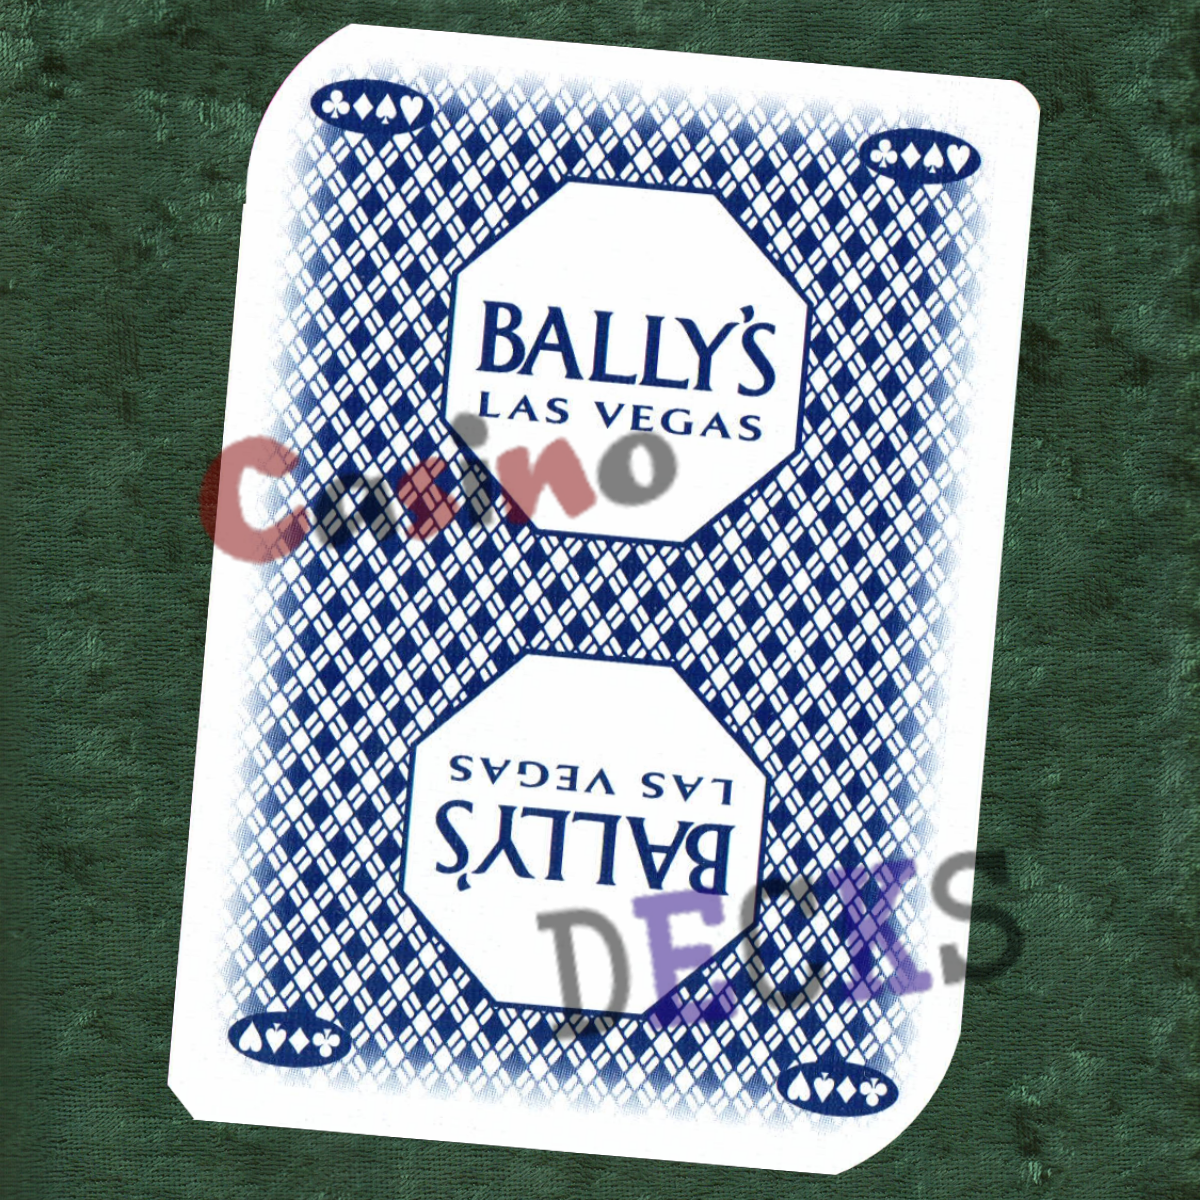 Bally's 2012 Lattice Octagon Deck